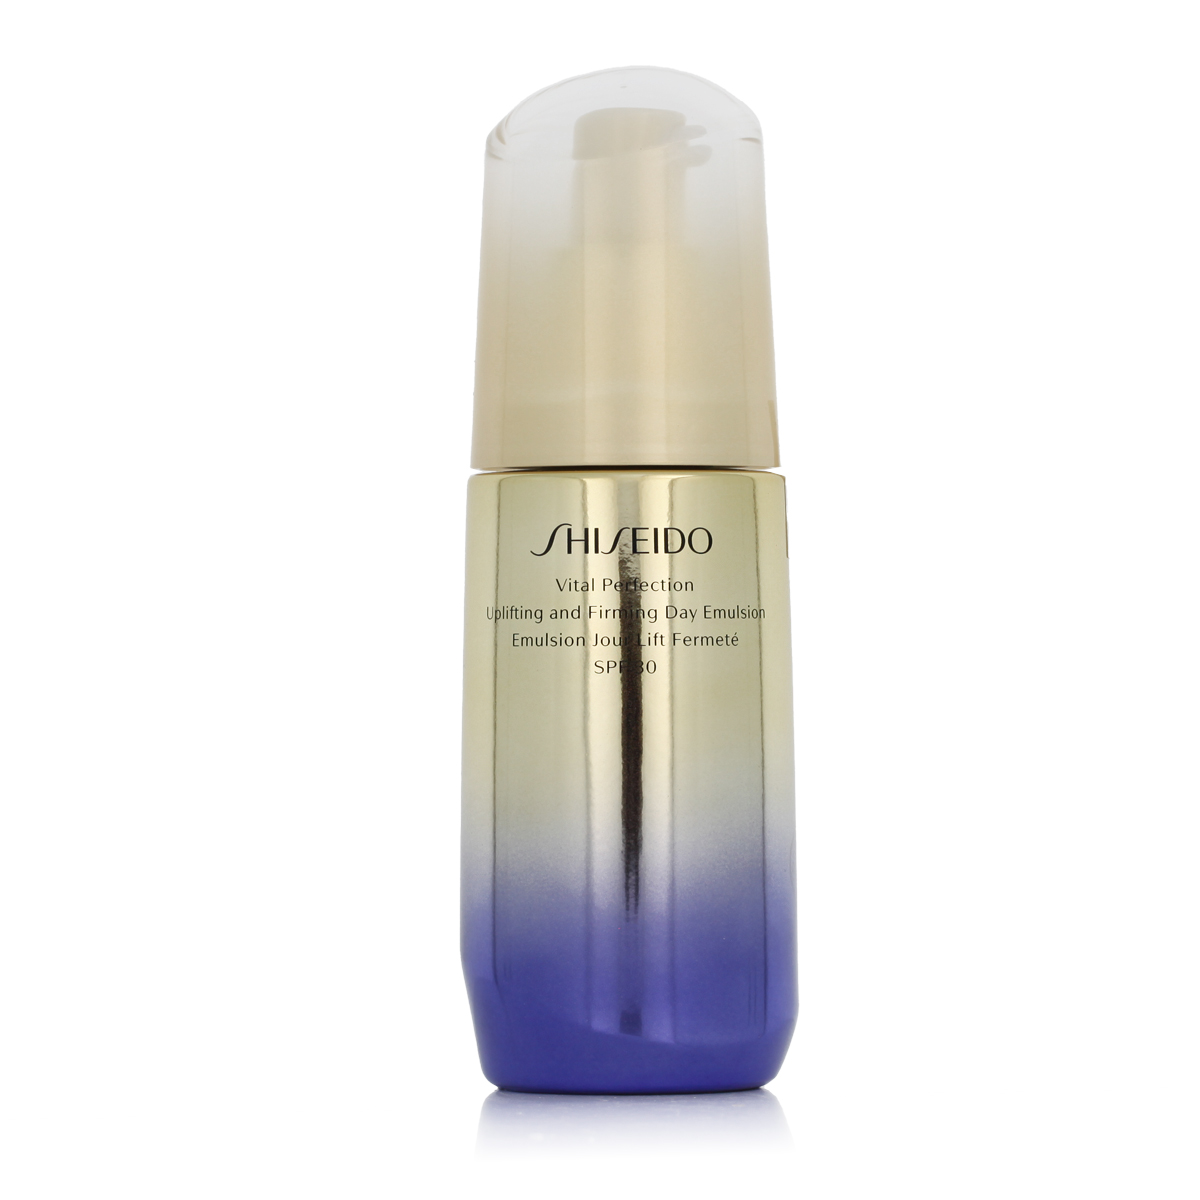 Shiseido Vital Perfection 75ml Veido serumas